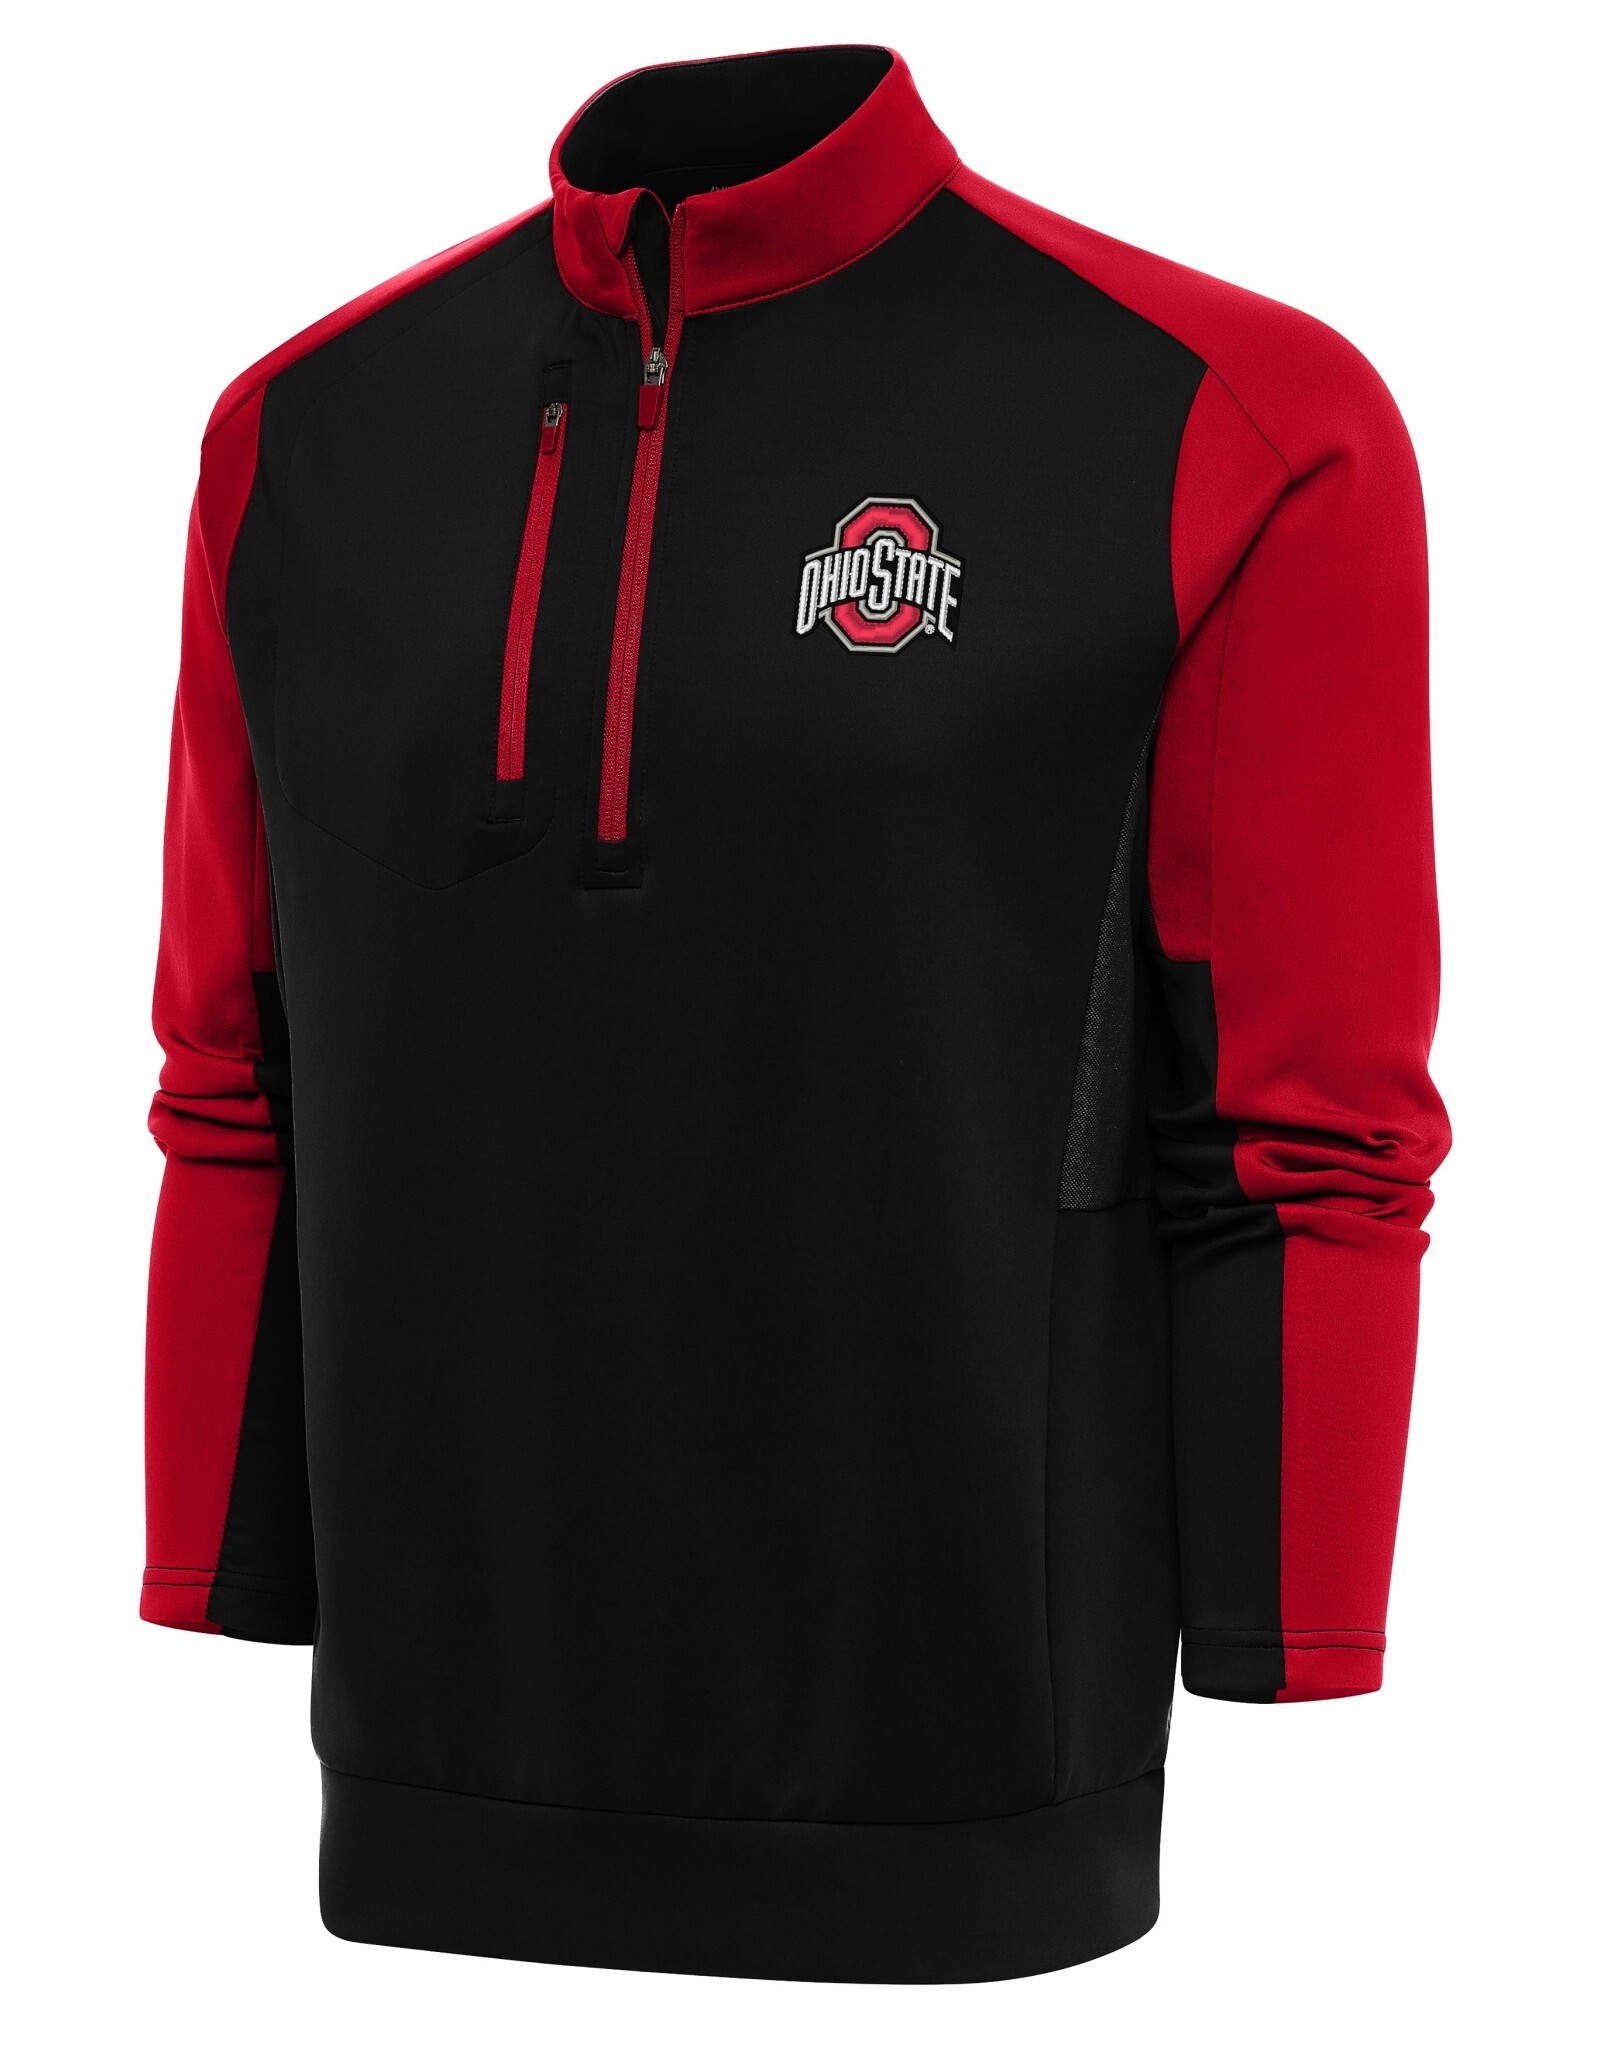 ANTIGUA Ohio State Buckeyes Men's Team Quarter Zip Pullover Top - Red/Black